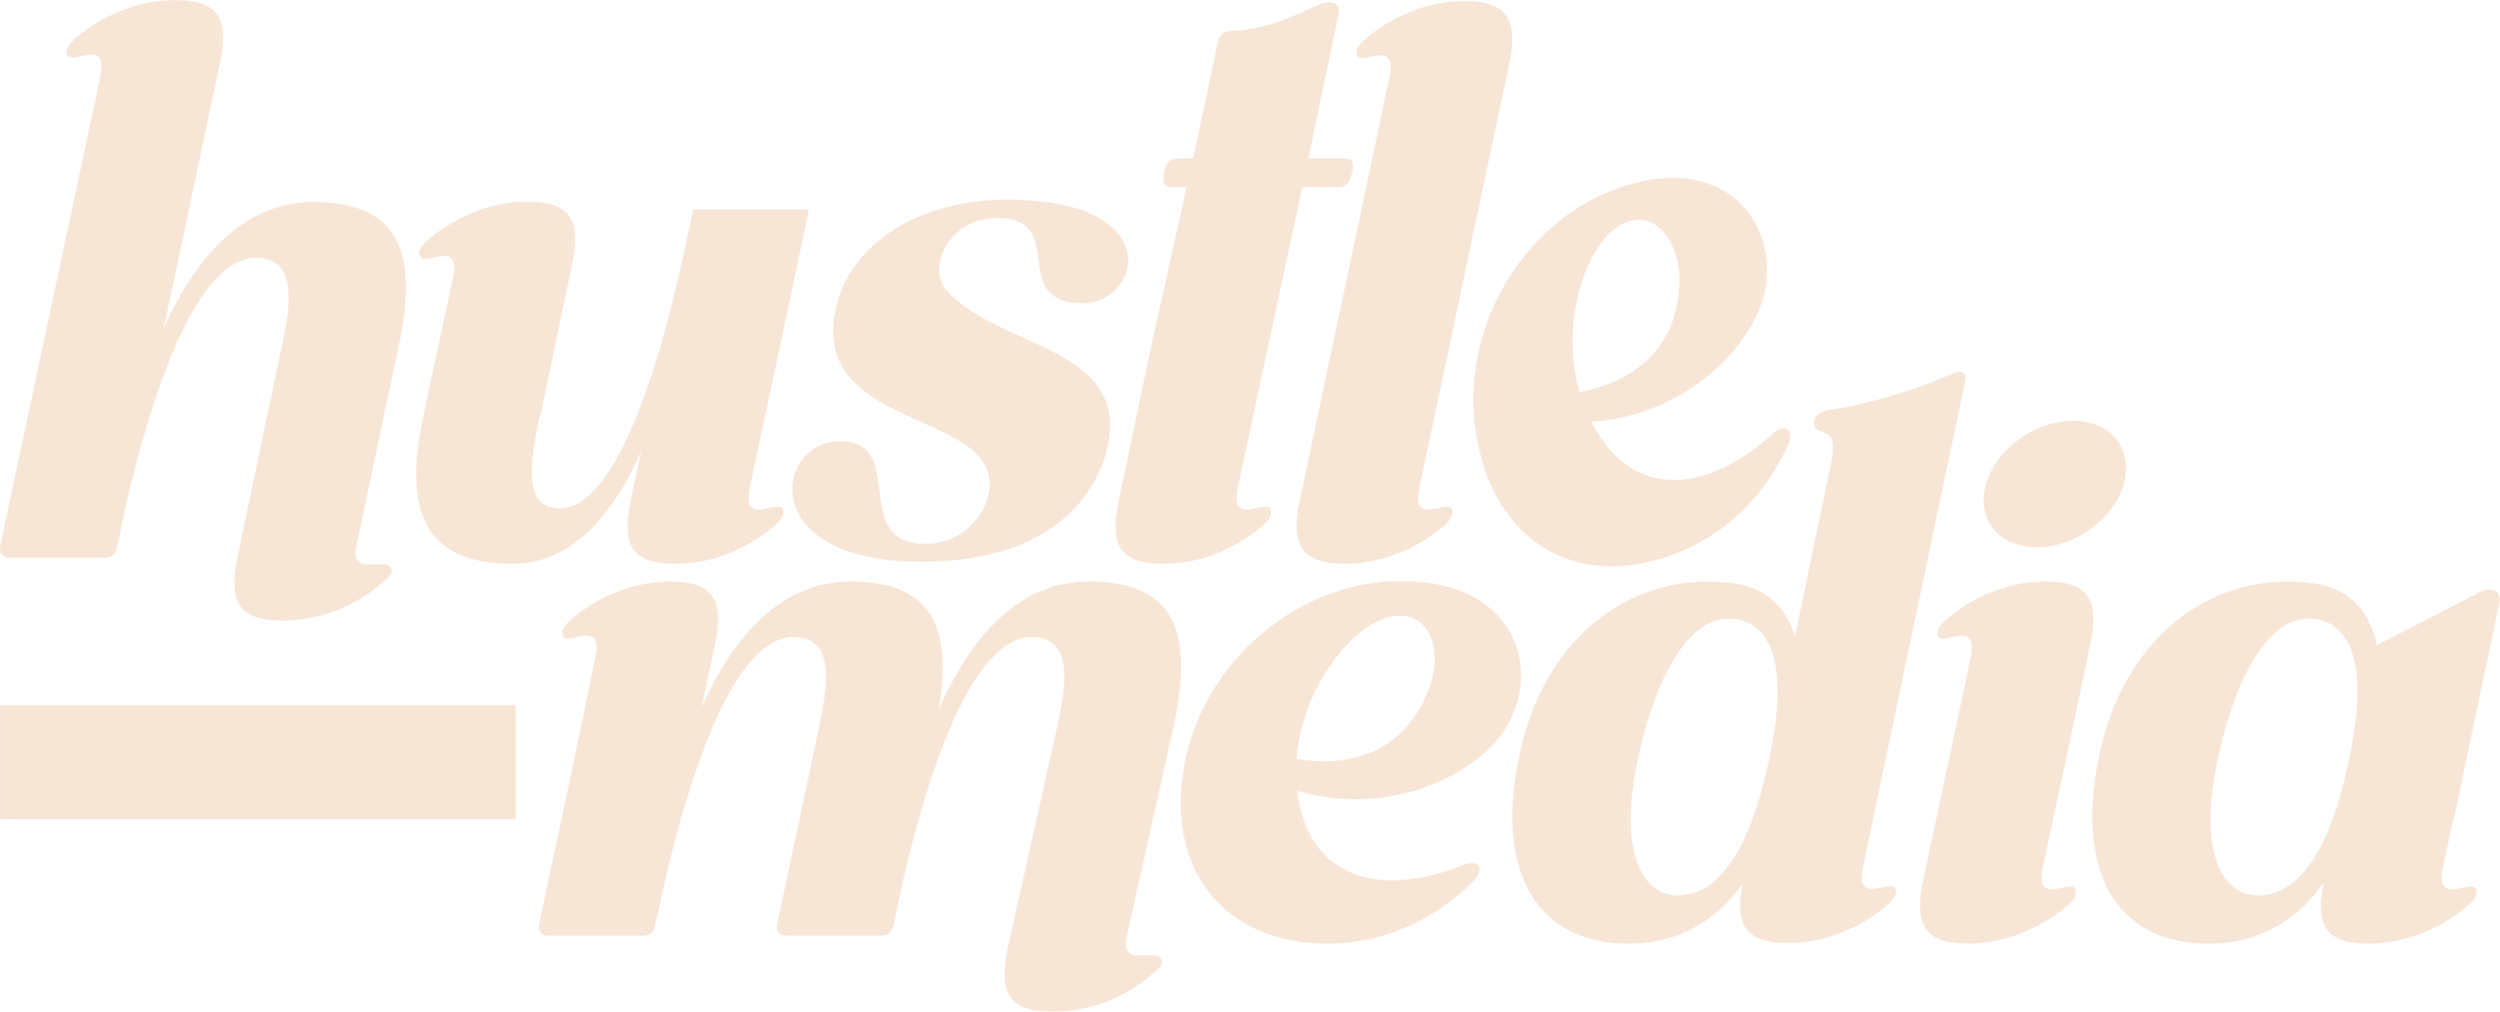 Hustle Media